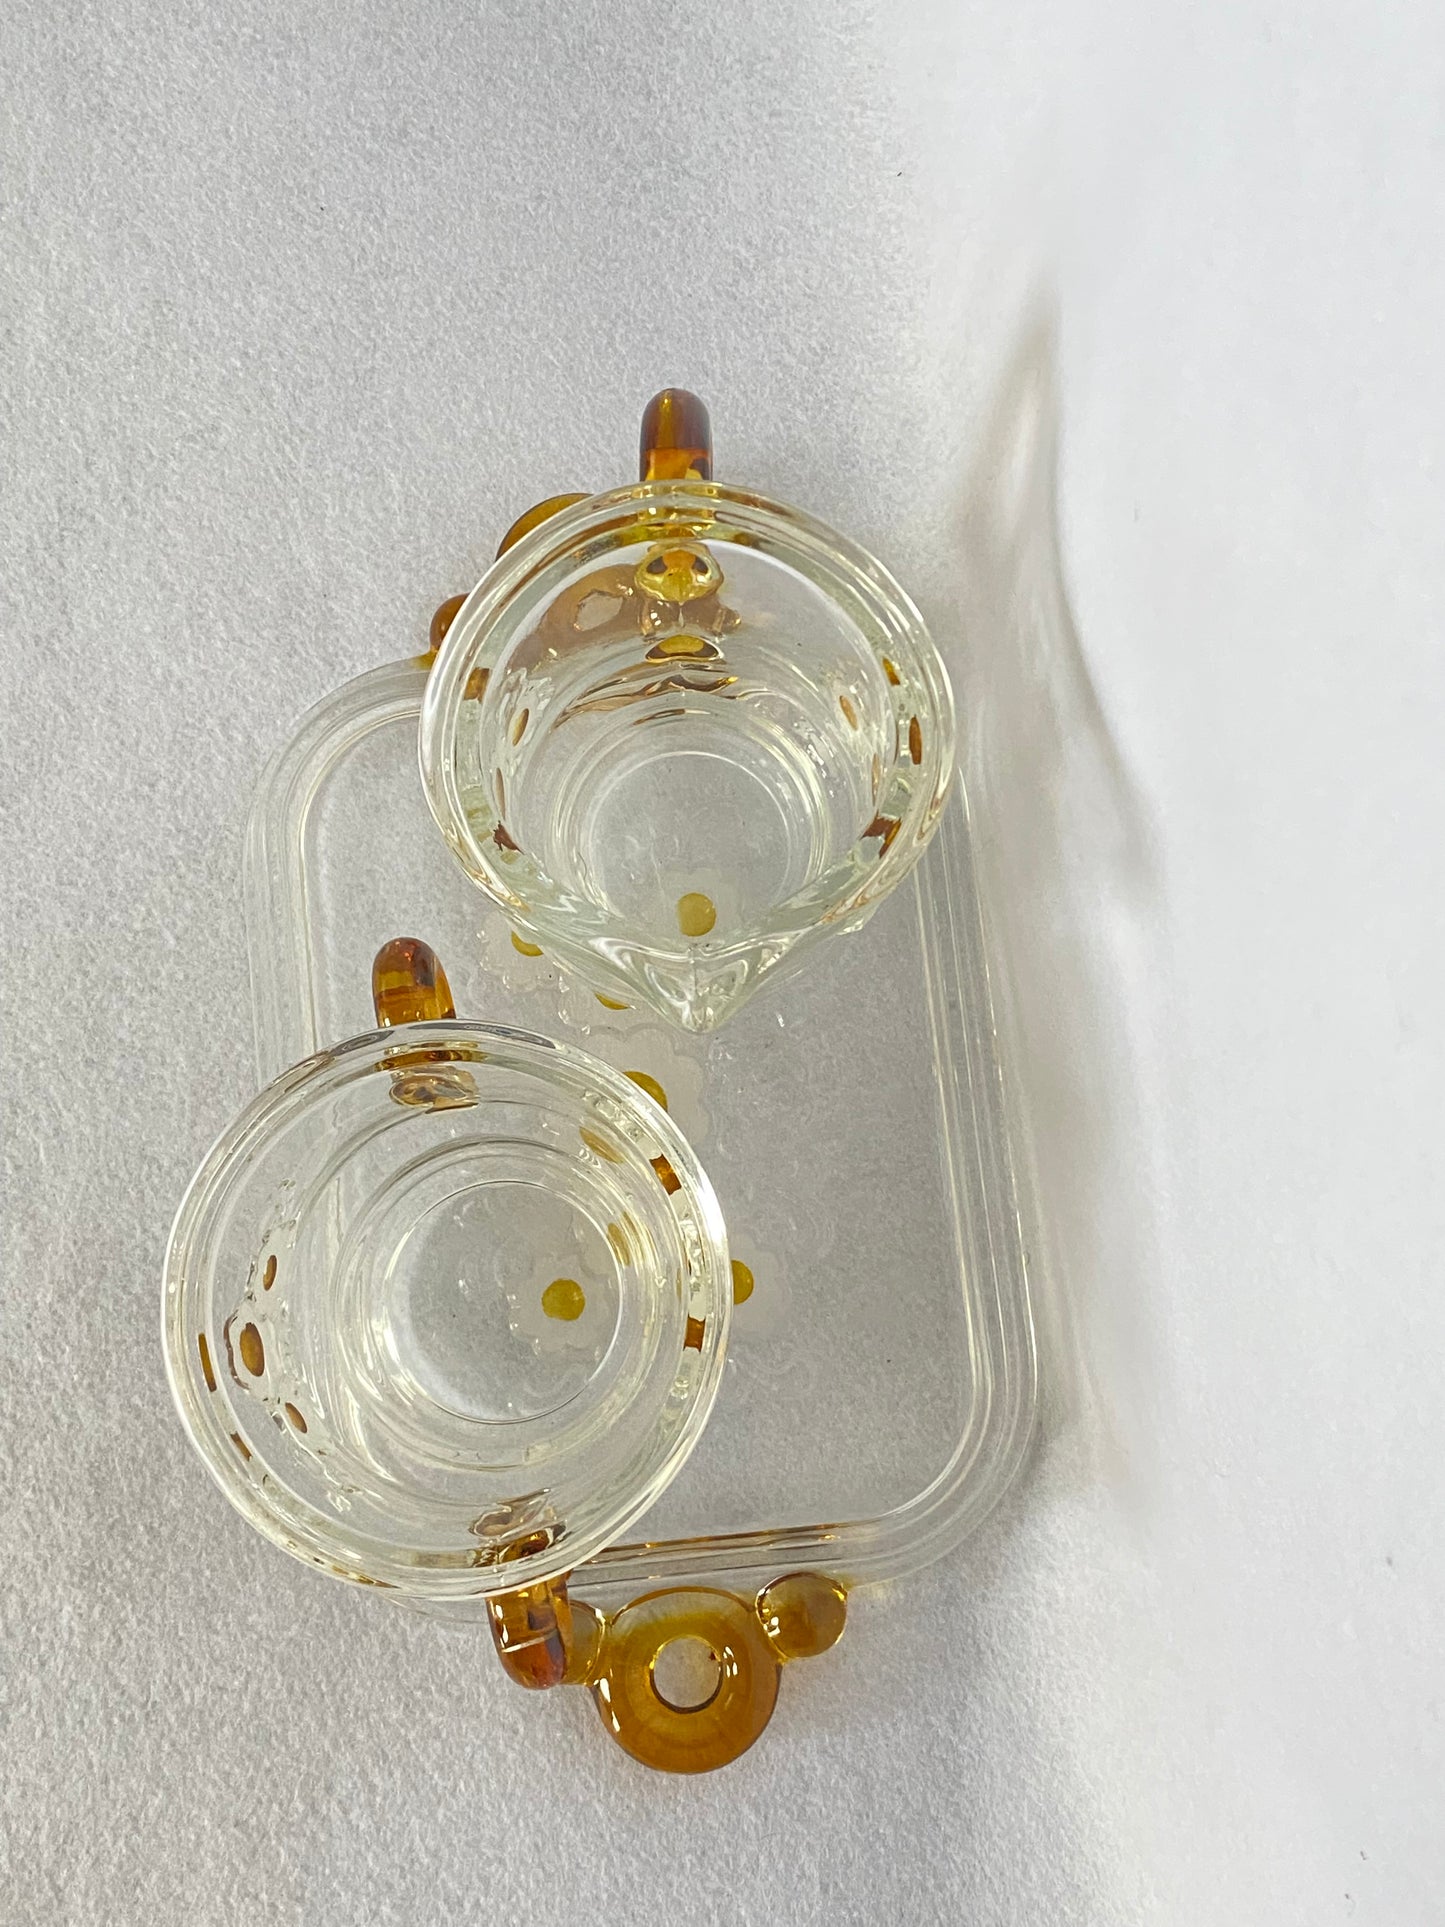 1970s Walther Crystal Glas Campana Sugar/Creamer on Glass Tray Set